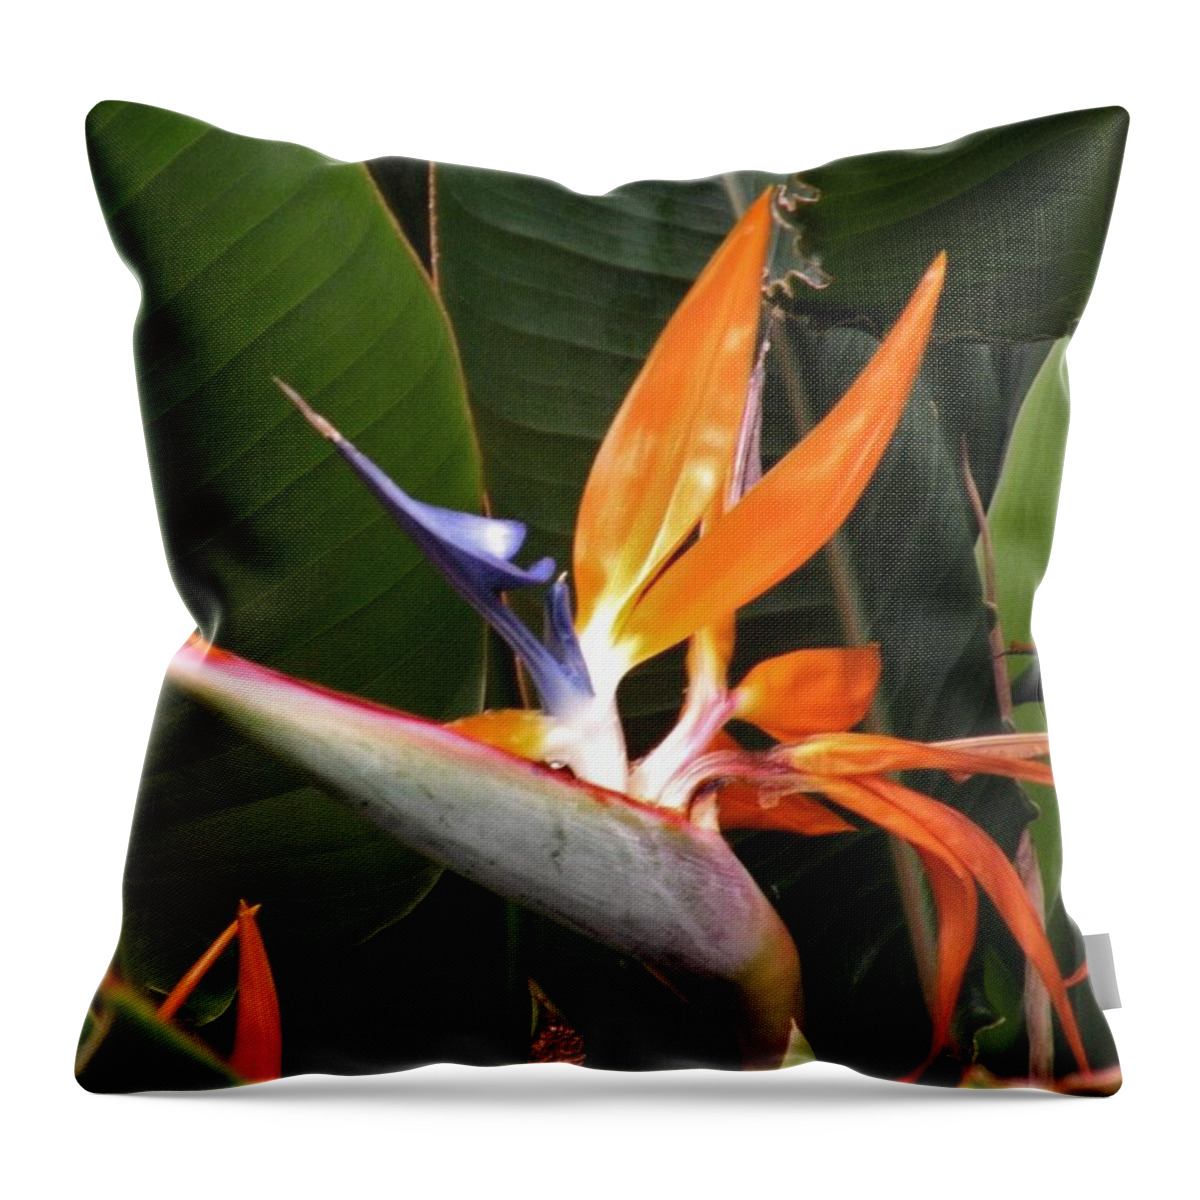 Bird Of Paradise Throw Pillow featuring the photograph Bird of Paradise Flowers by Kim Bemis